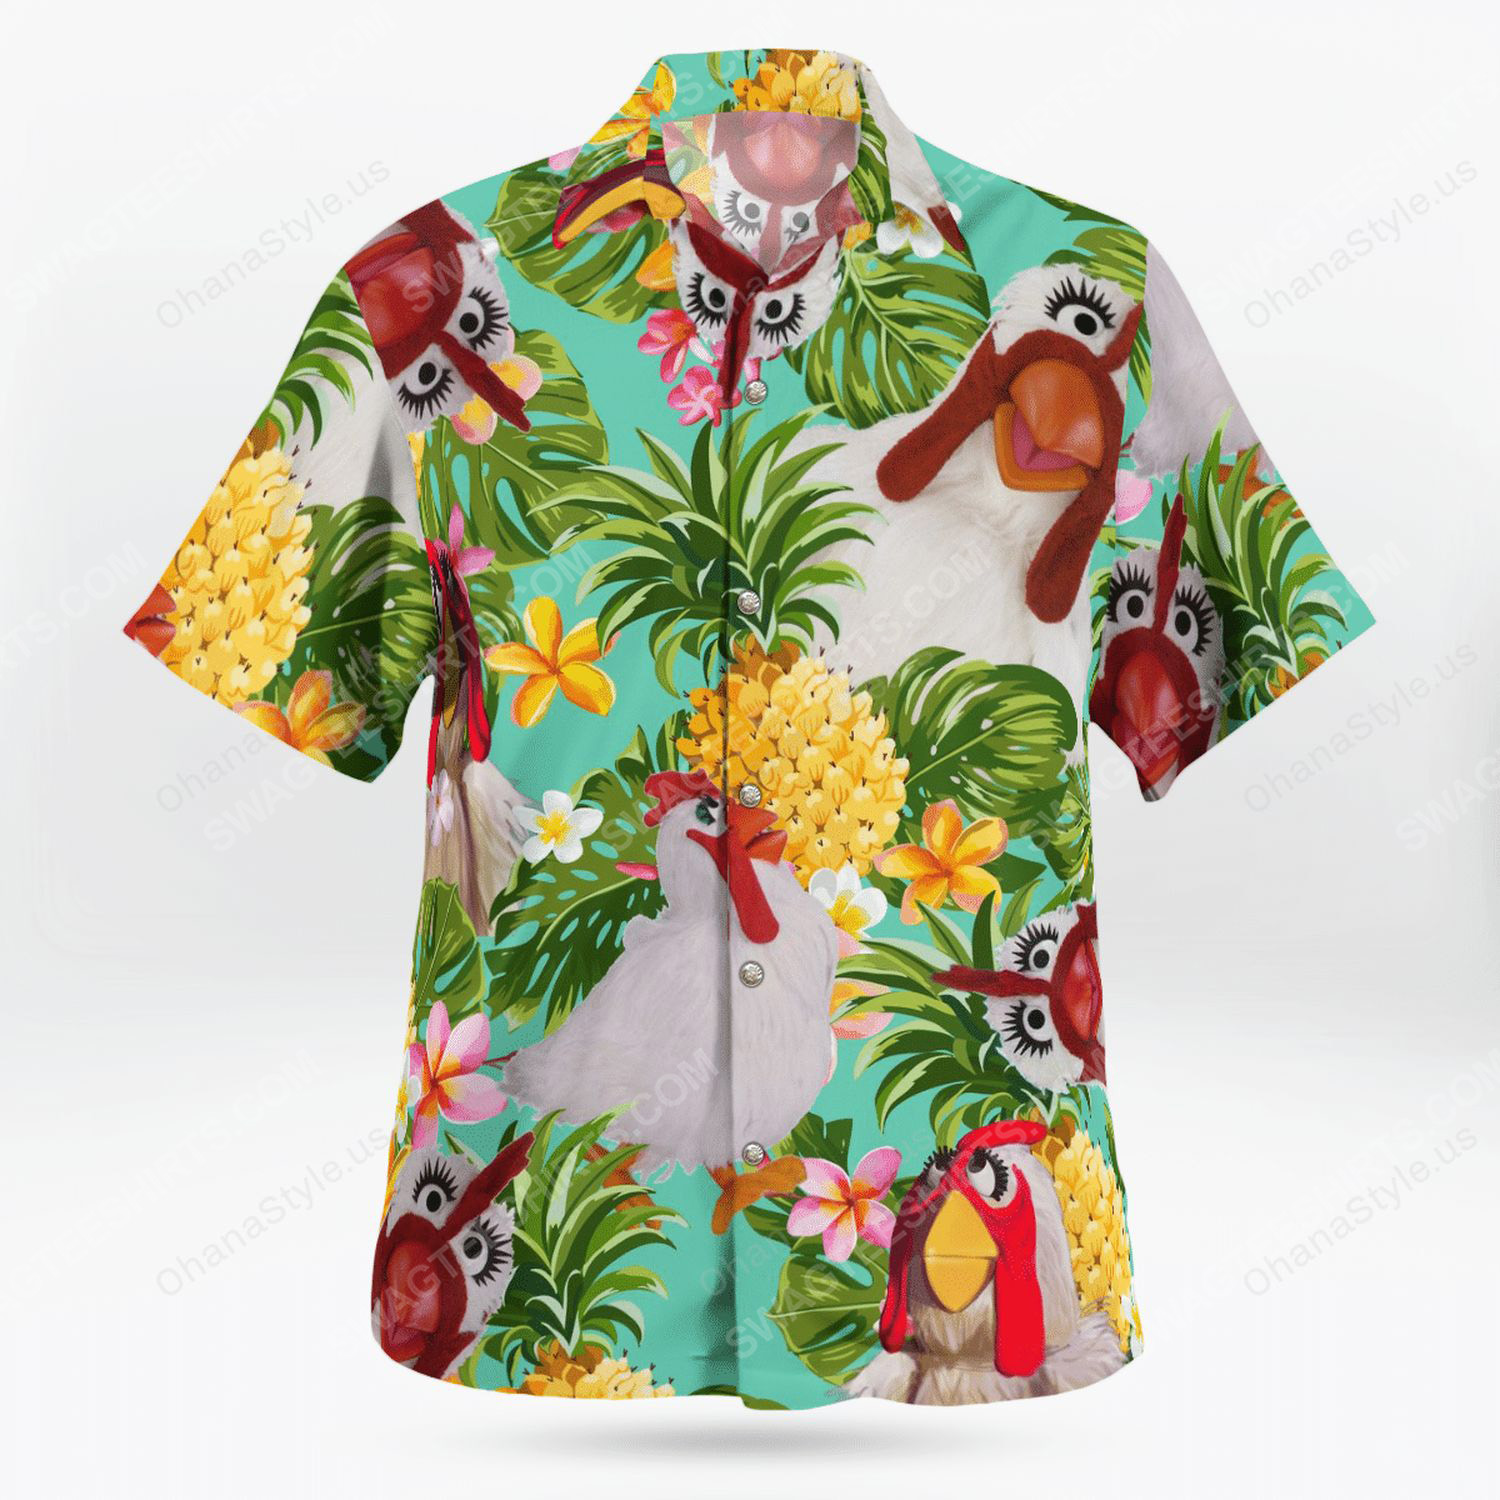 The muppet show camilla the chicken hawaiian shirt 2